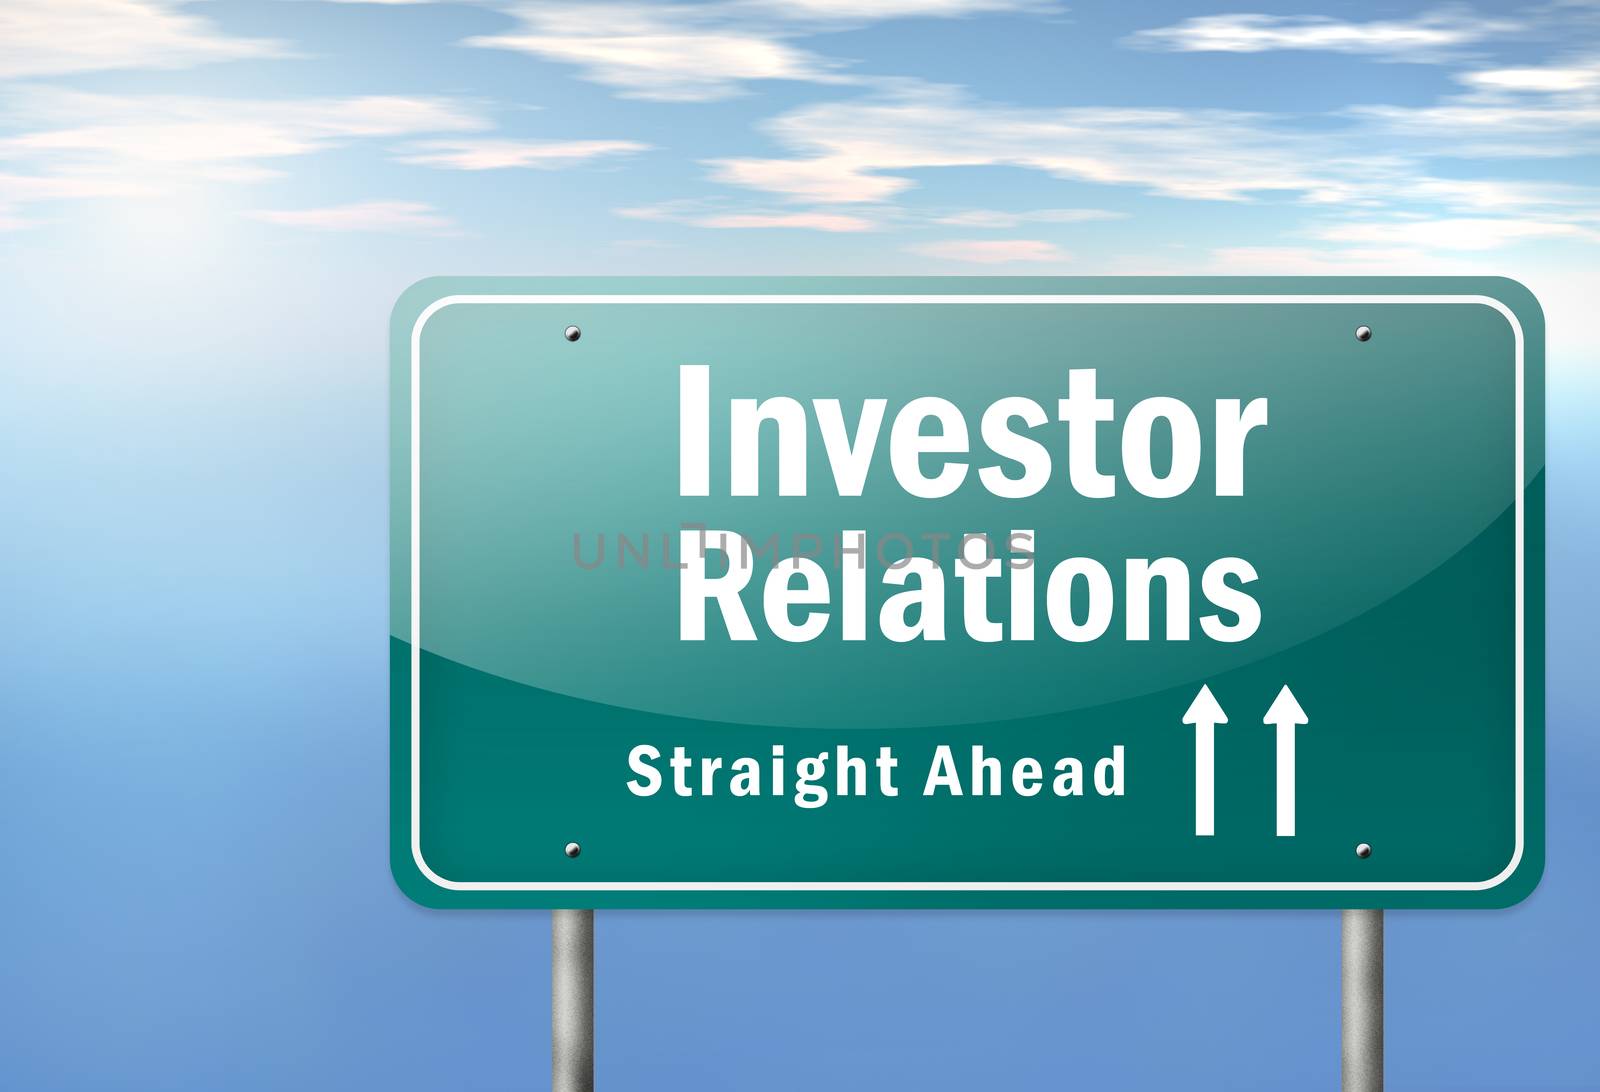 Highway Signpost Investor Relations by mindscanner